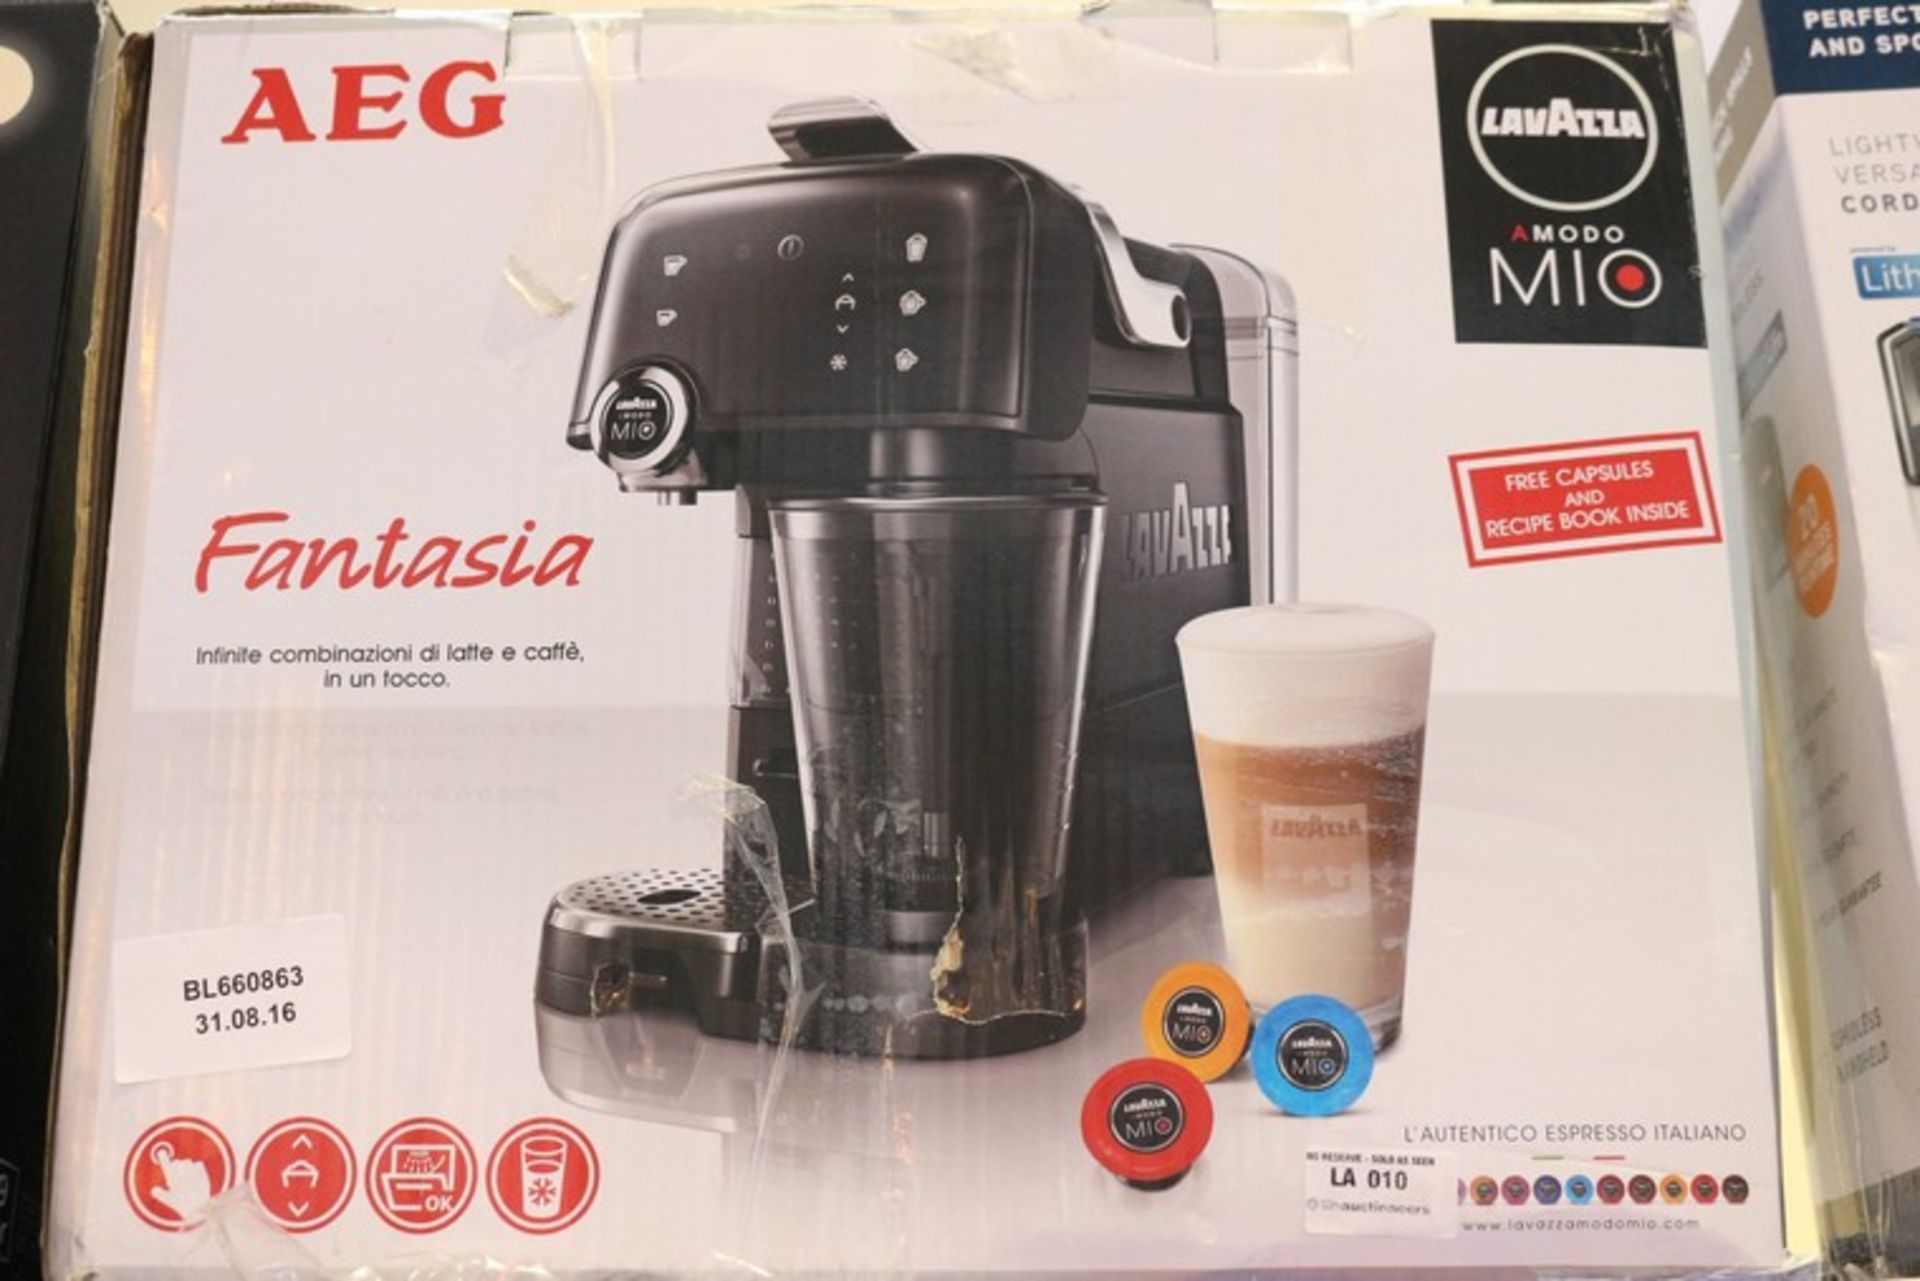 1 x BOXED AEG LAVAZZA AMODO MIO FANTASIA COFFEE MACHINE (31.8.16) *PLEASE NOTE THAT THE BID PRICE IS